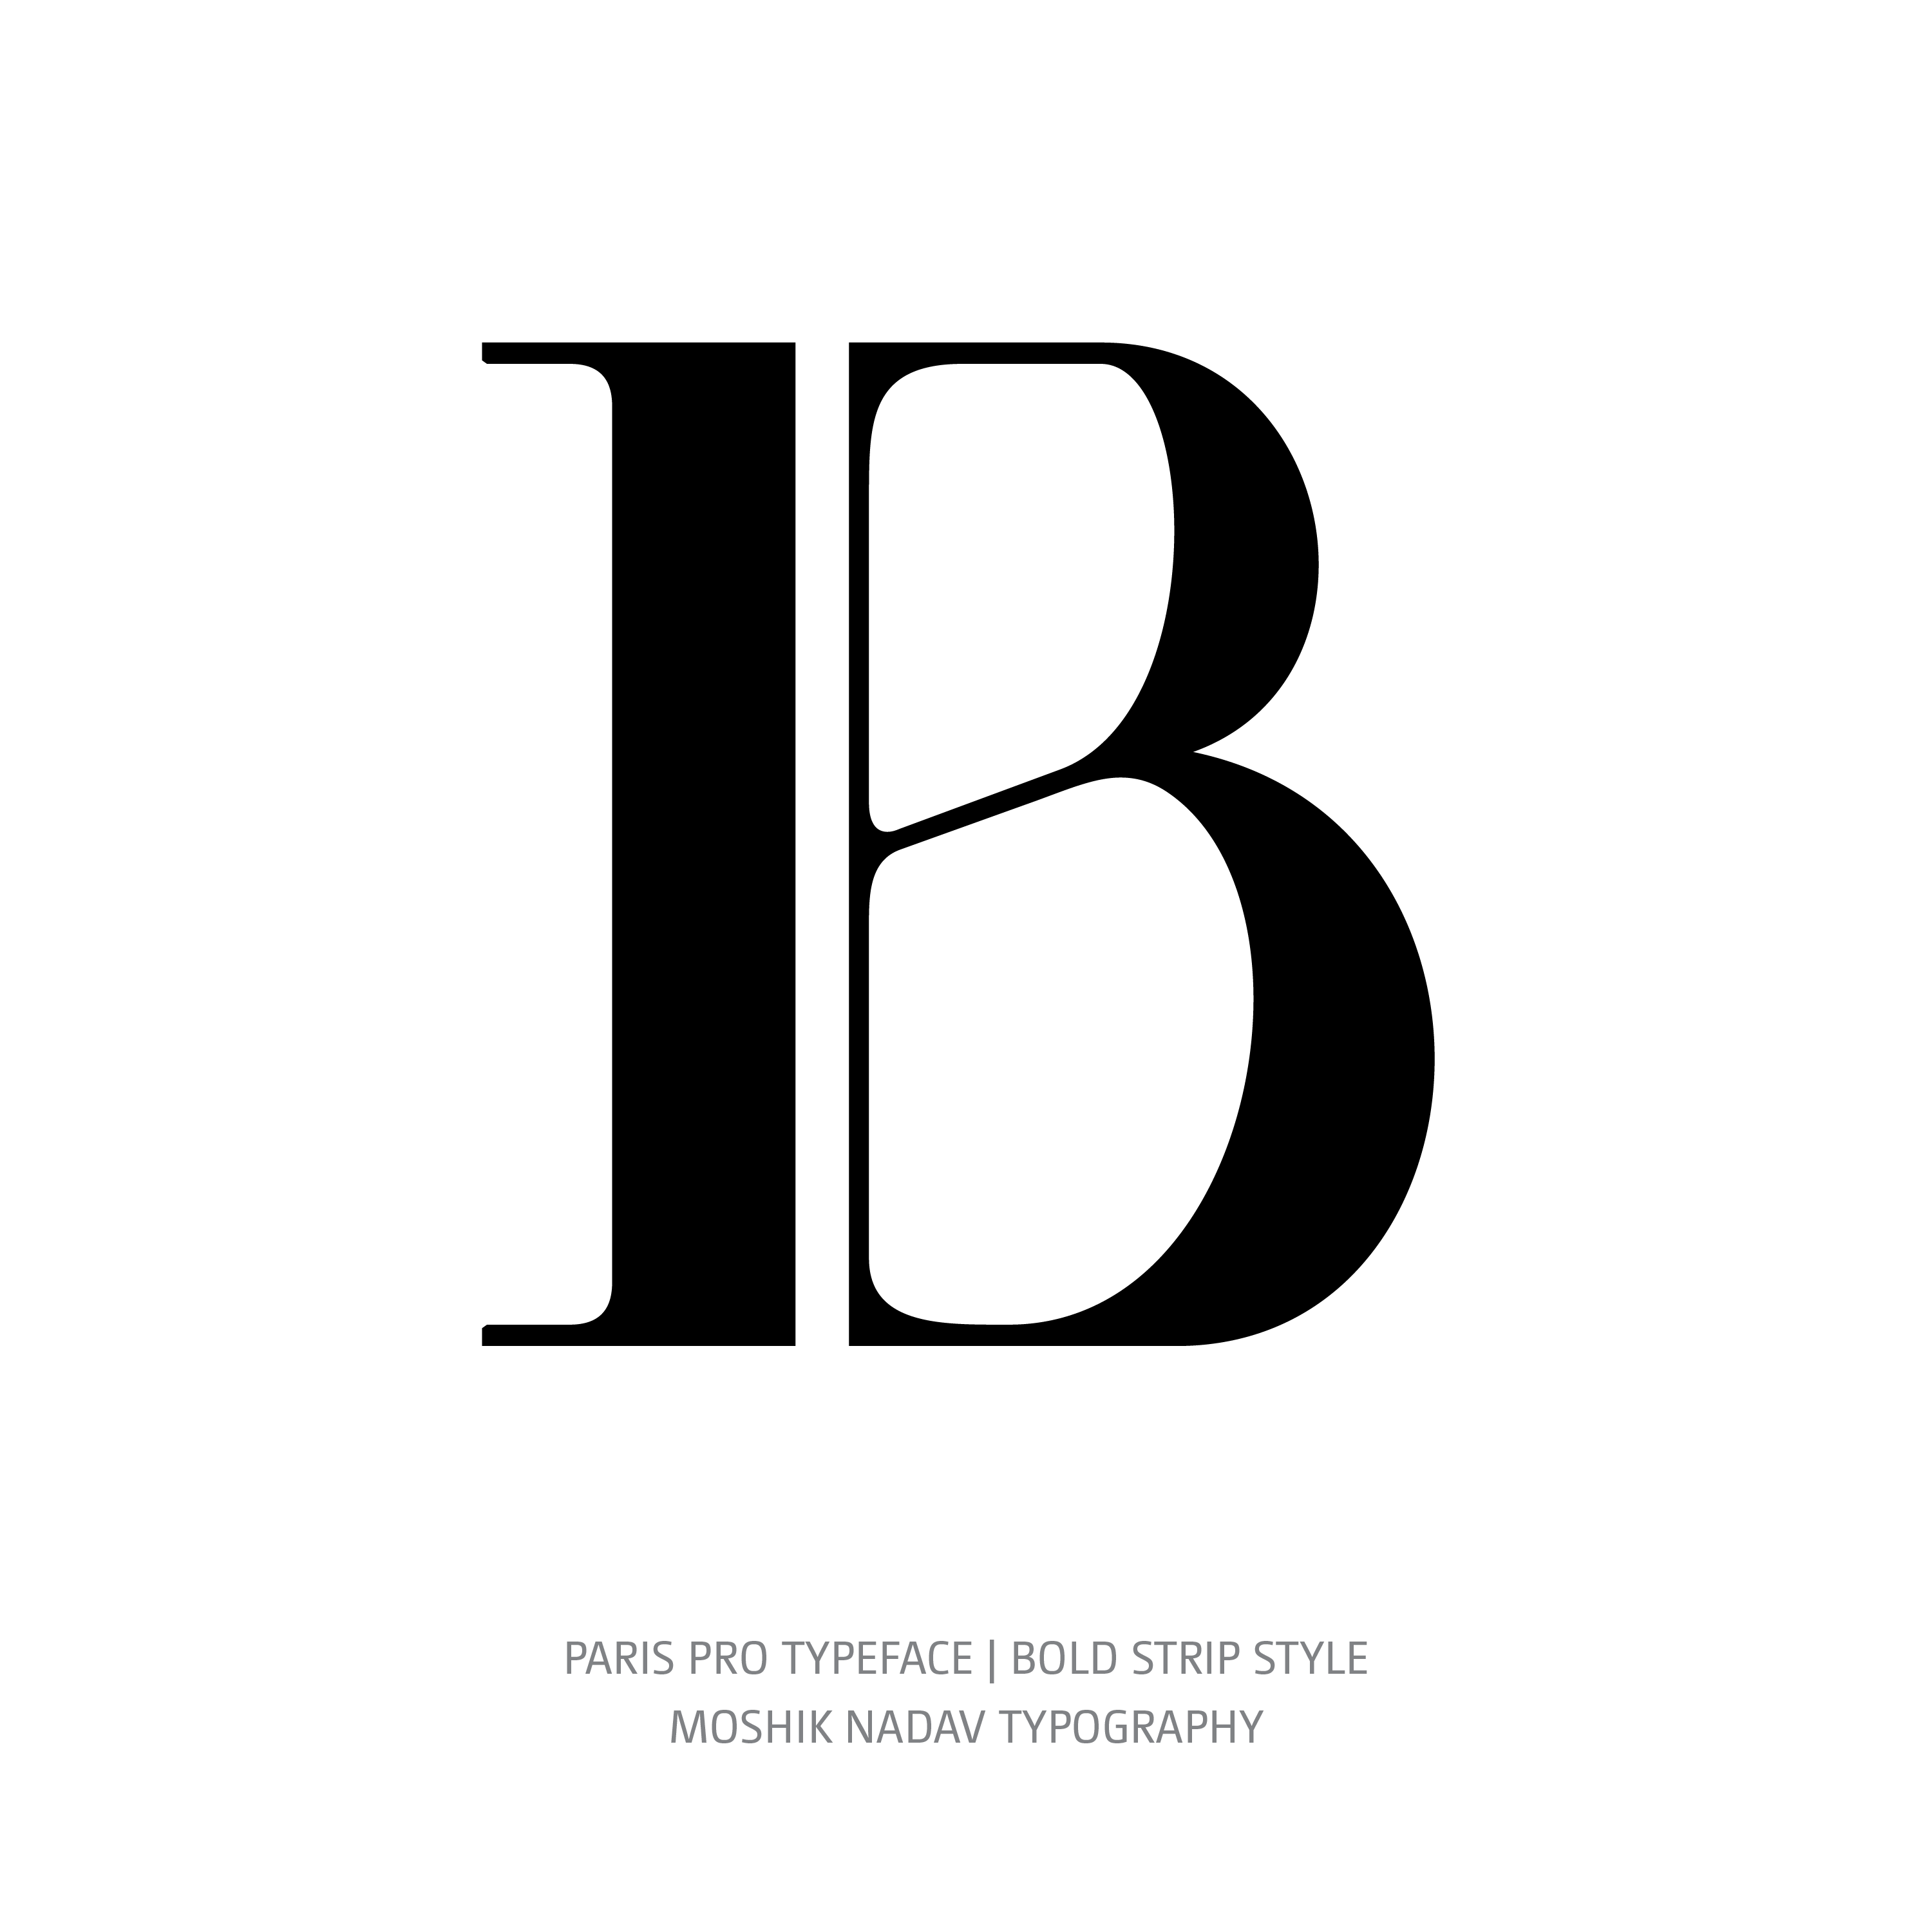 Paris Pro Typeface Bold Strip B